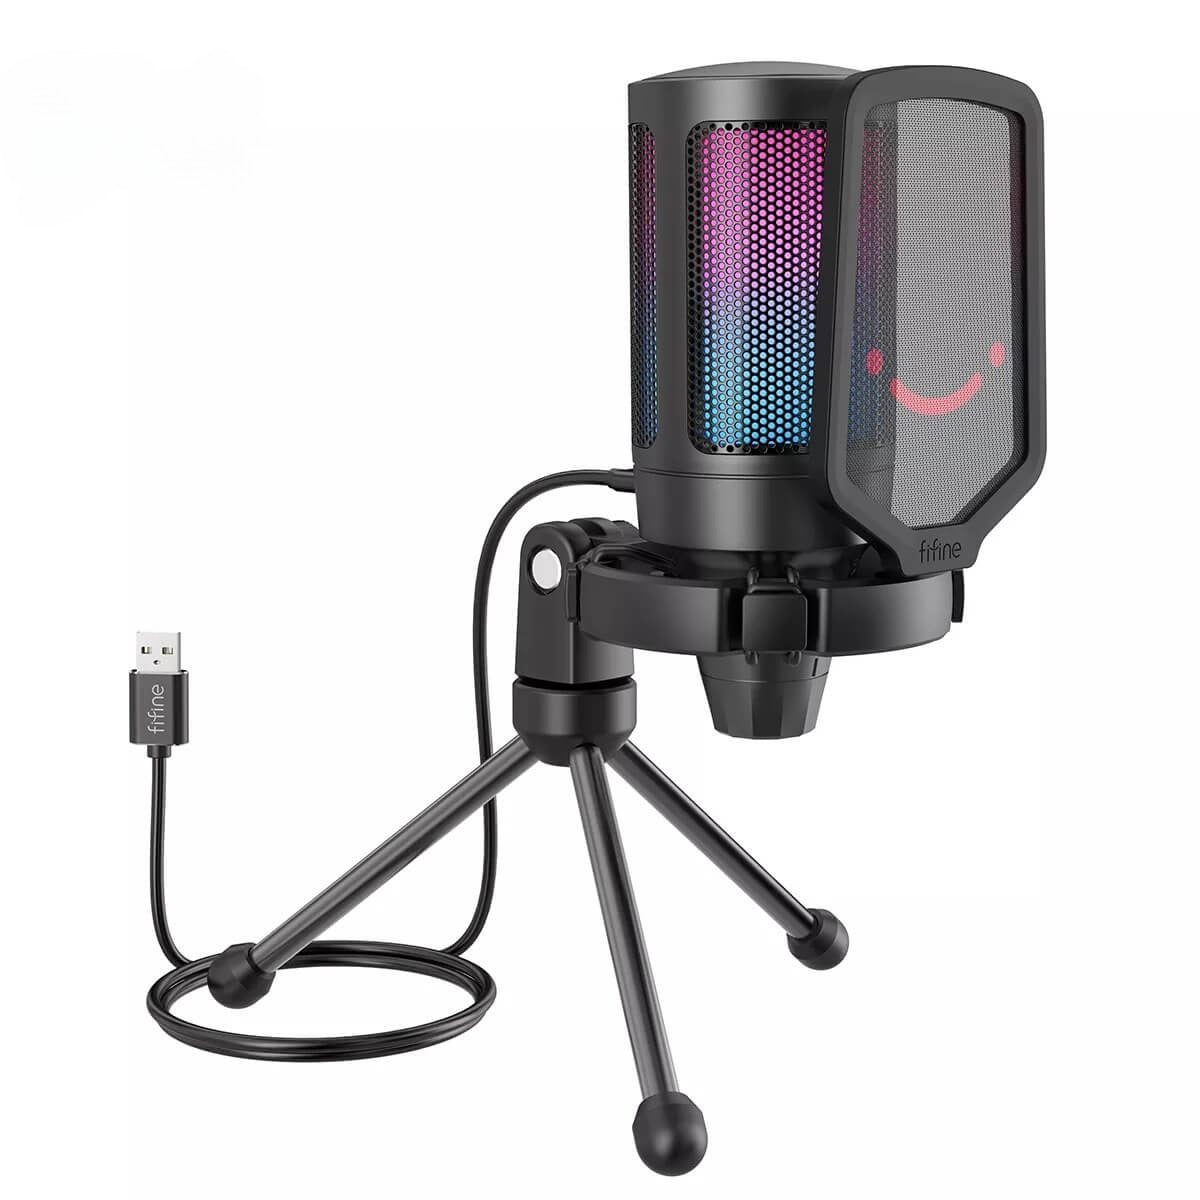 USB Condenser Gaming Microphone - LINWEY - Best USB Condenser Gaming Microphone